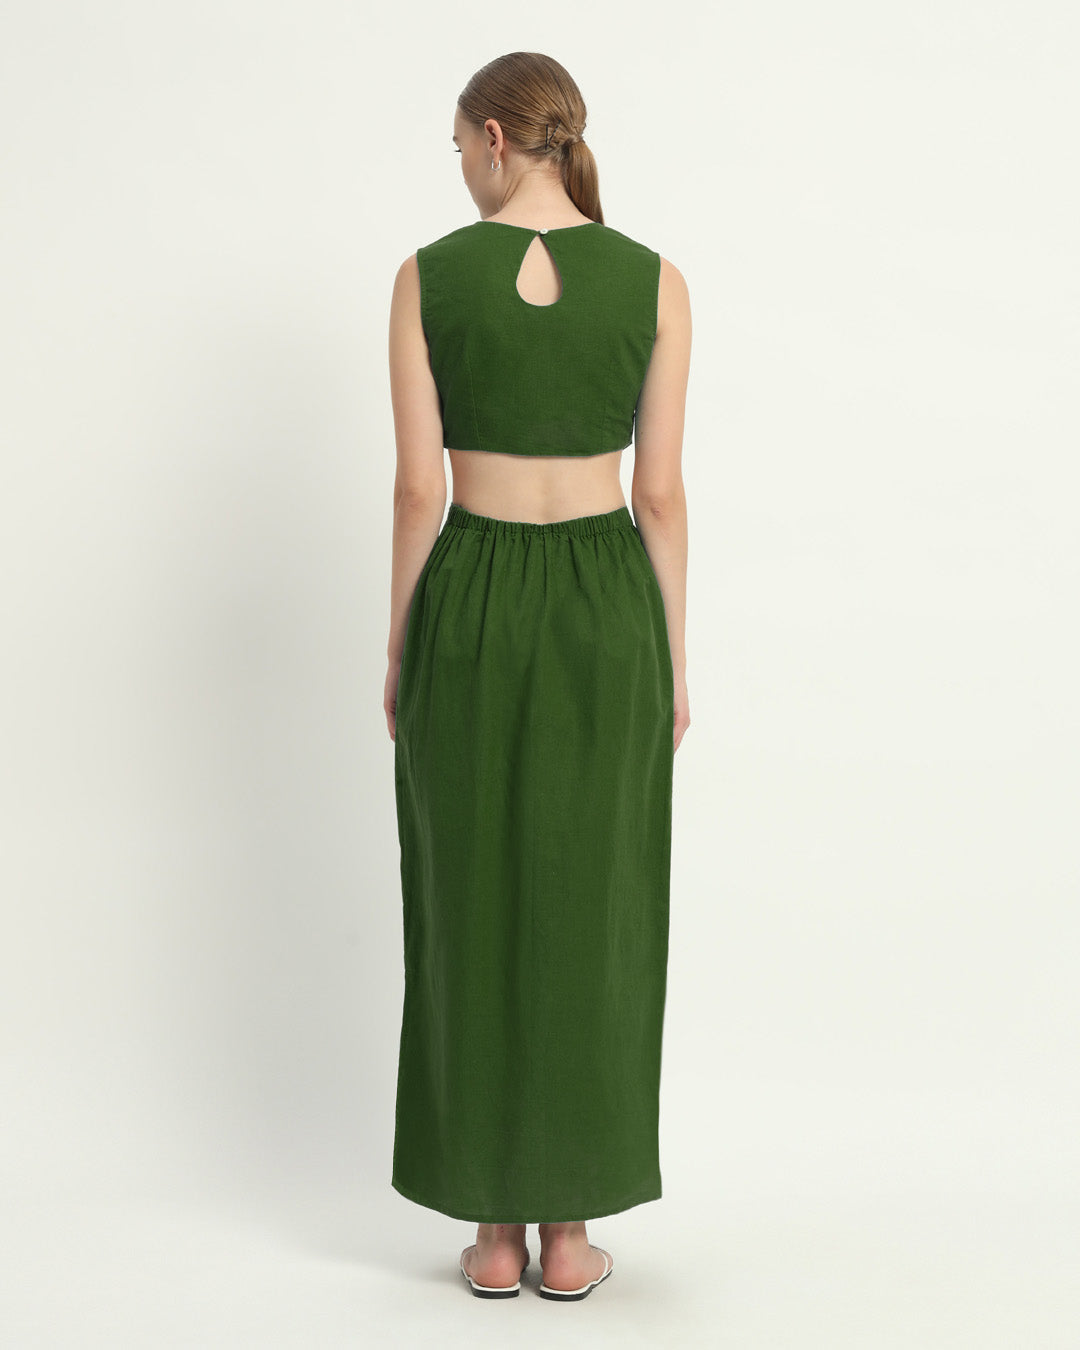 The Emerald Livingston Cotton Dress